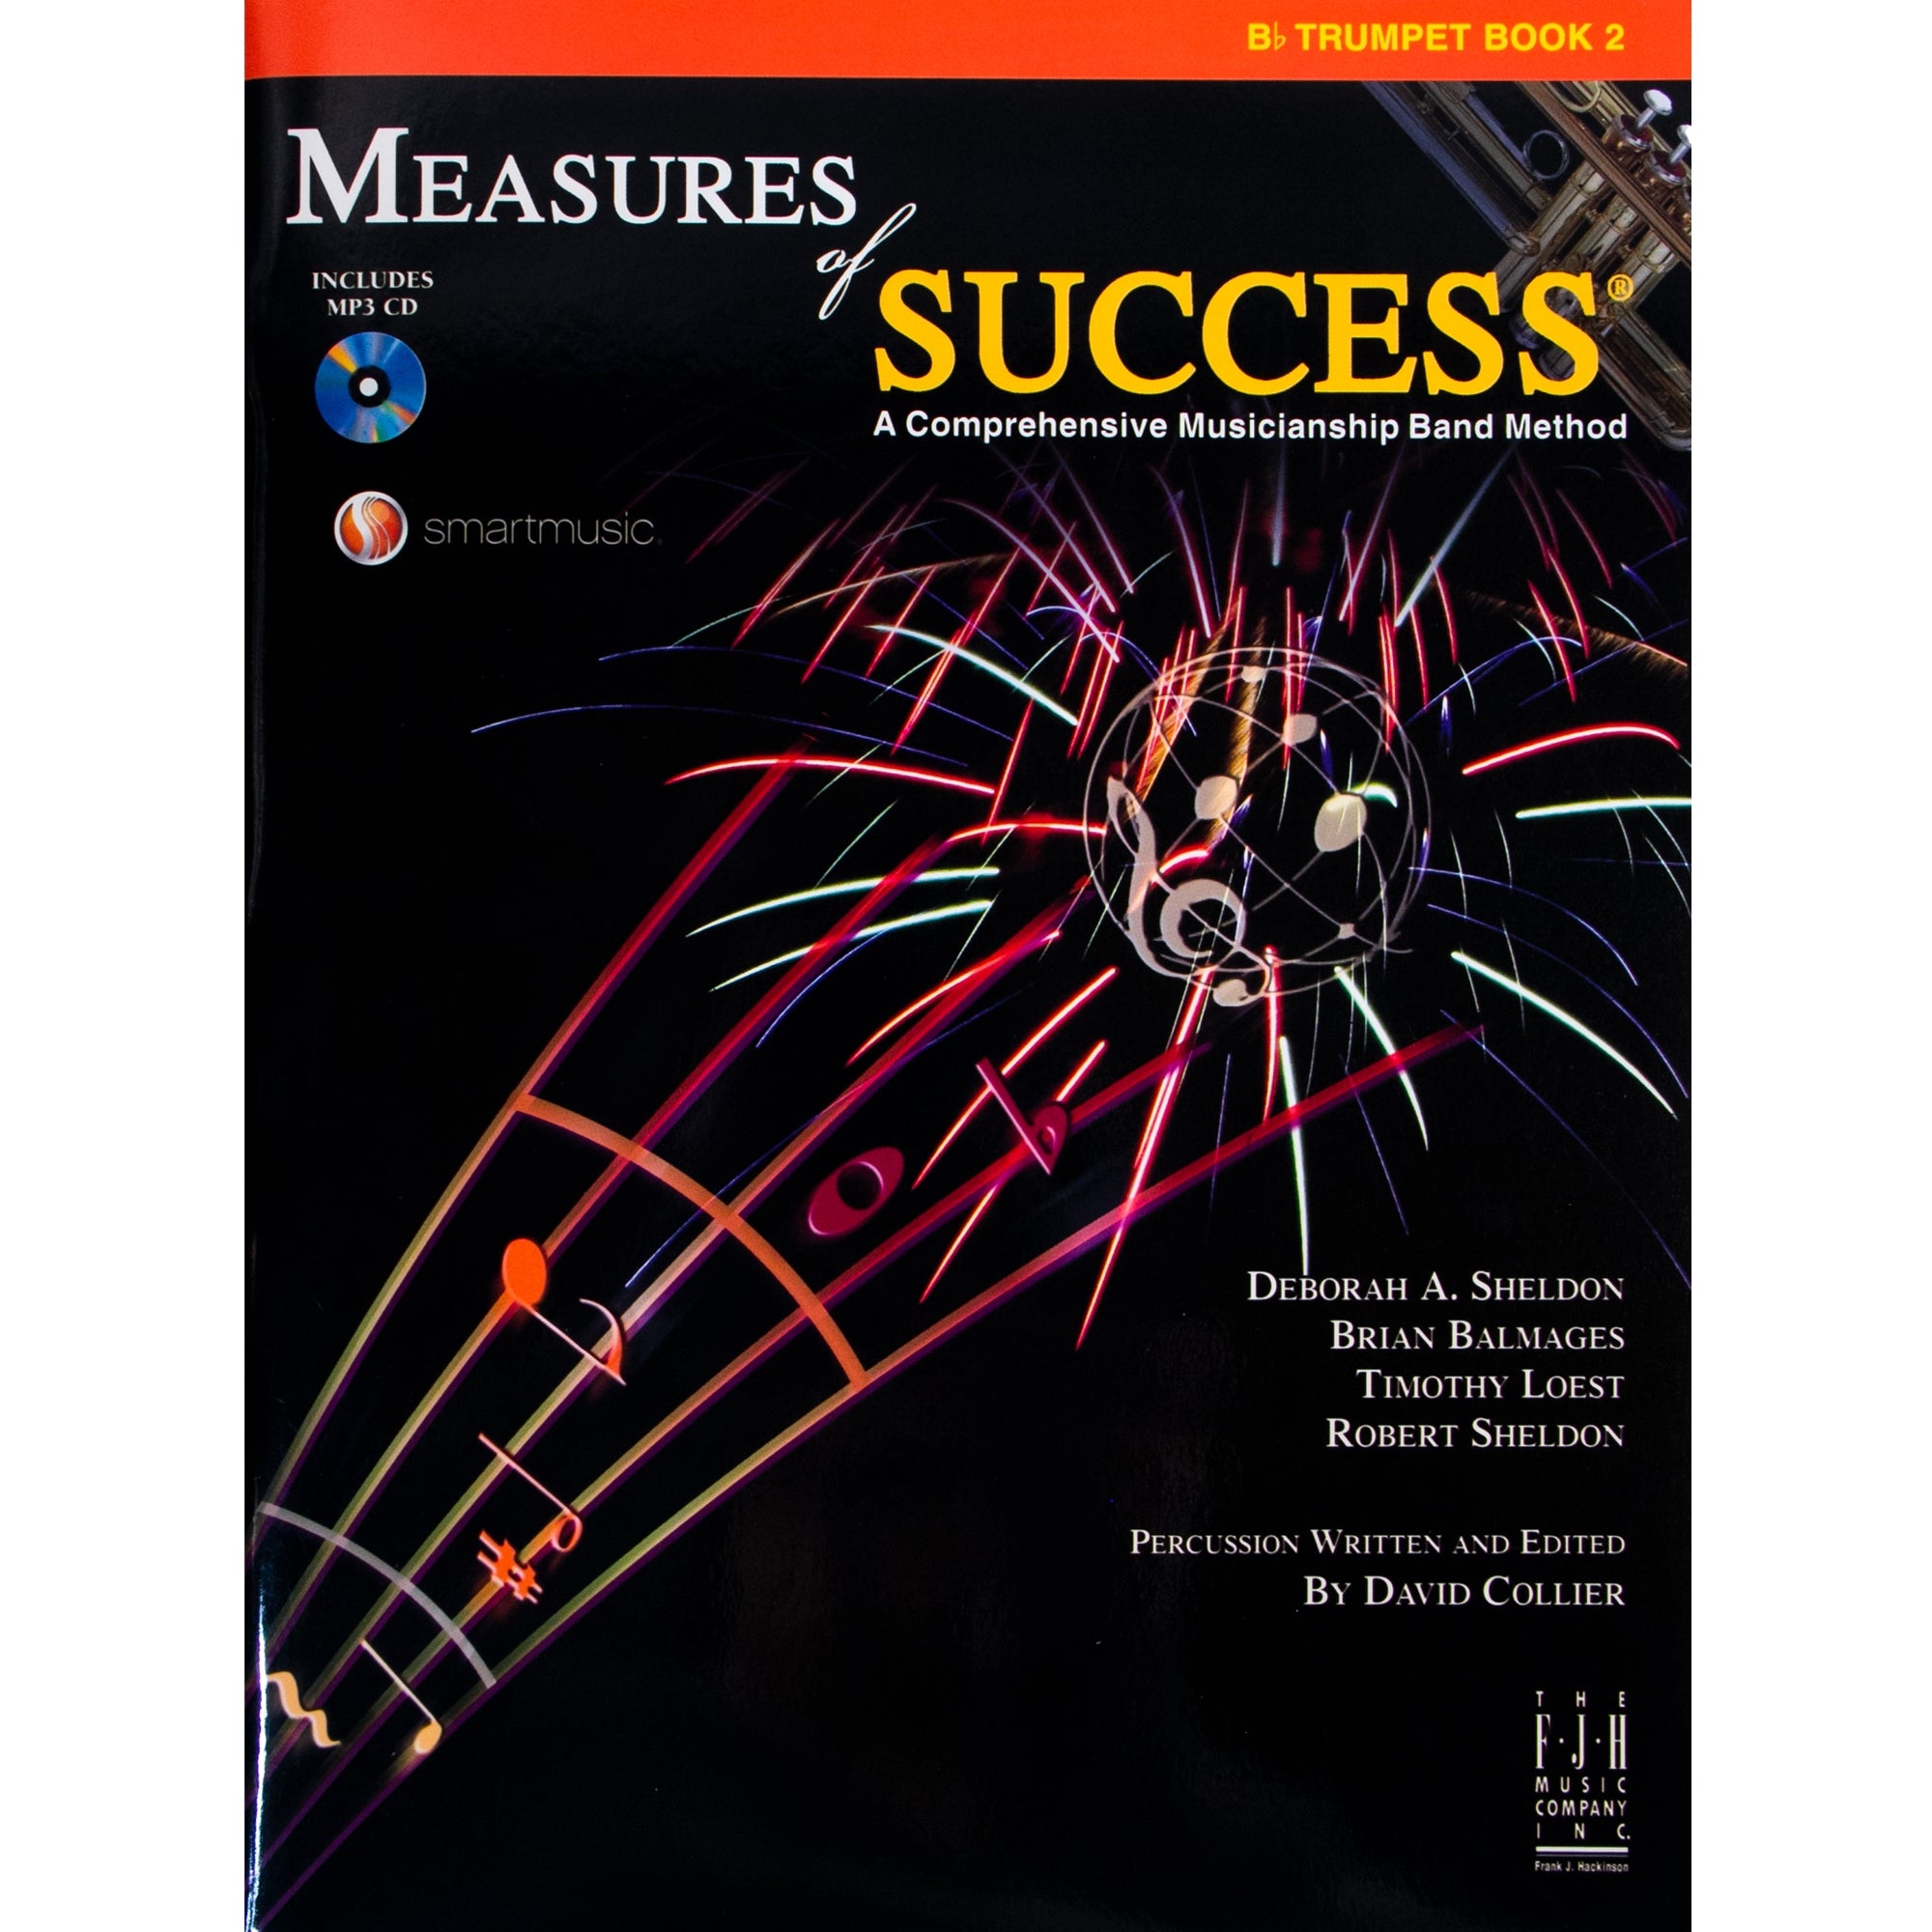 FJH PUBLISHER BB210TPT Measures Of Success Trumpet Bk 2